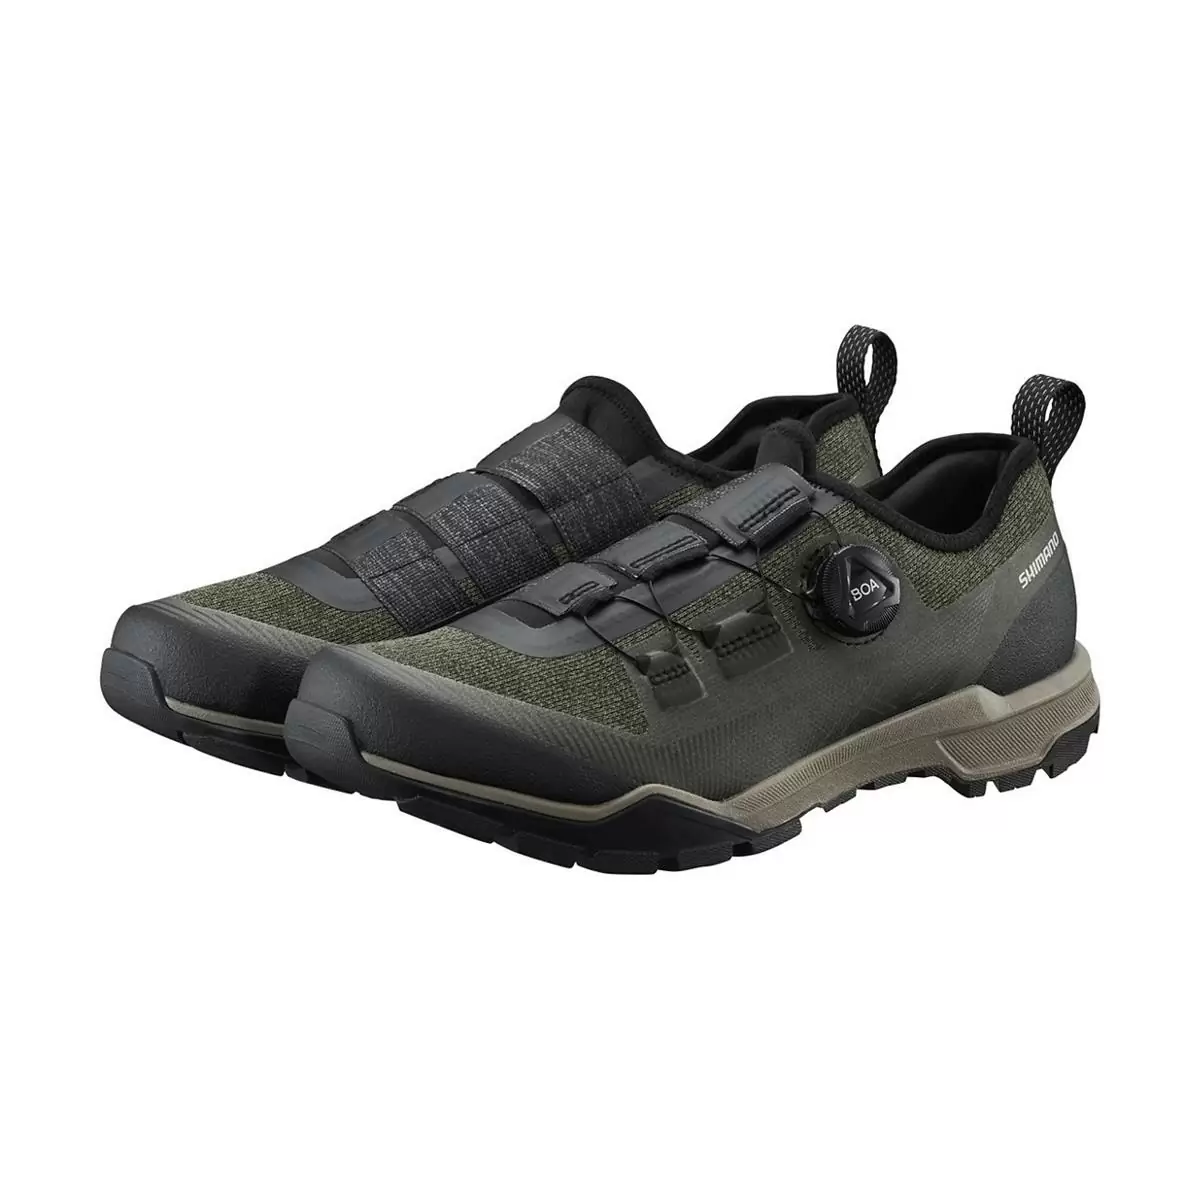 Trekking / MTB Shoes SH-EX700 Green Size 48 #4